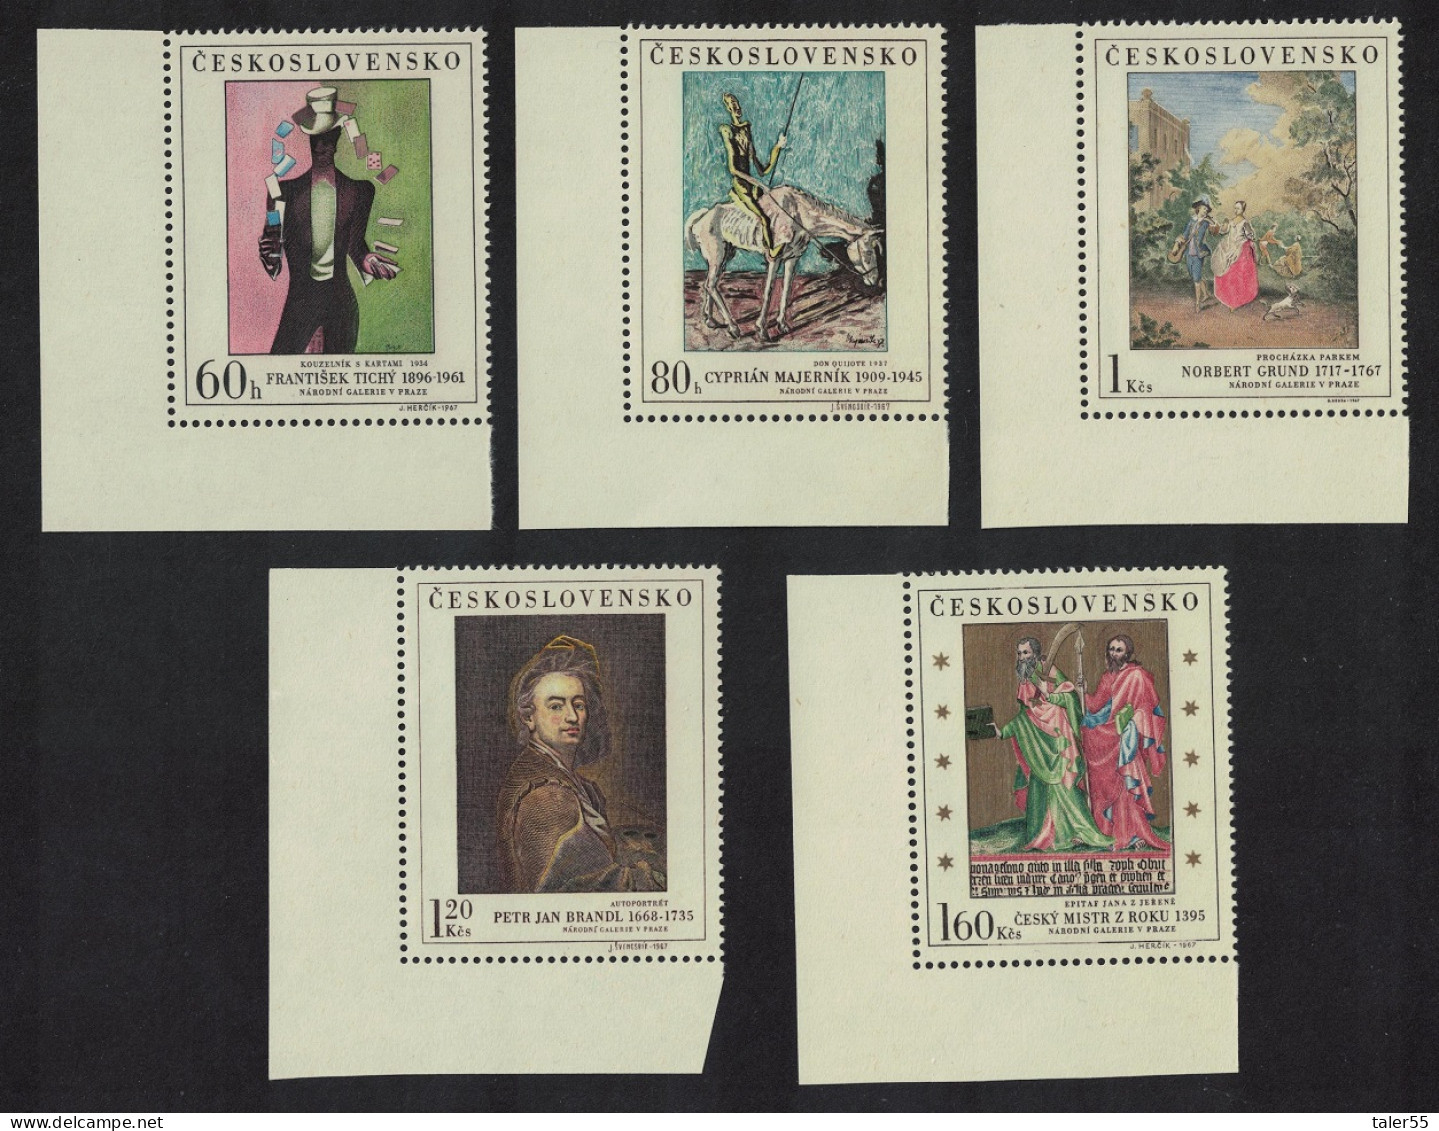 Czechoslovakia Art 2nd Series 5v Corners 1967 MNH SG#1699-1703 - Unused Stamps